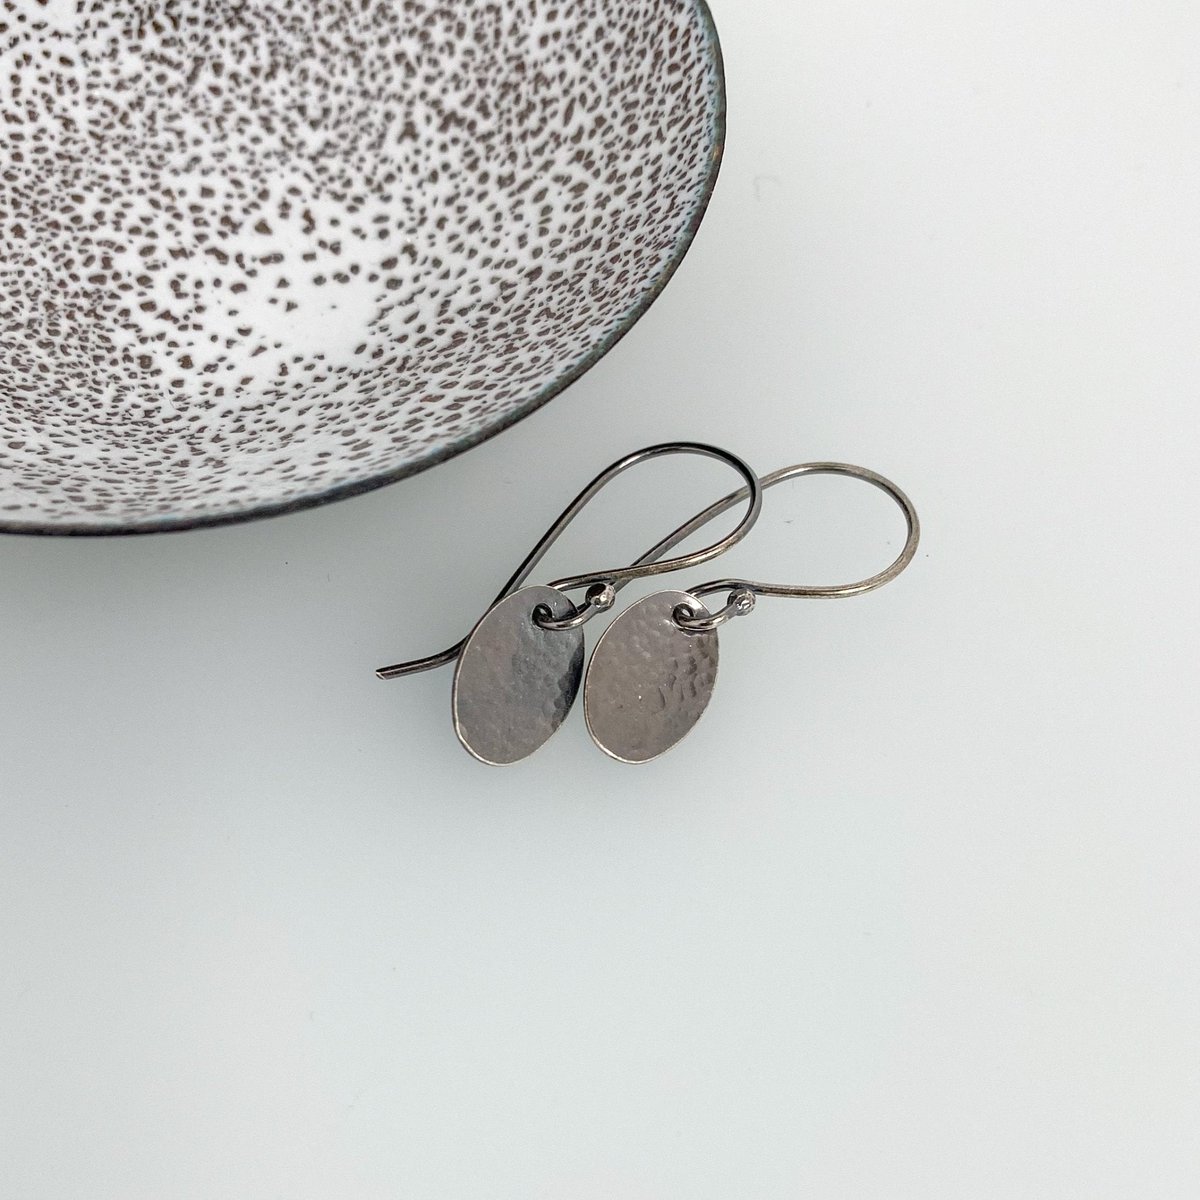 Oxidised Oval Drop Earrings tuppu.net/3c5cb7ce #bizbubble #HandmadeHour #MHHSBD #shopsmall #giftideas #UKHashtags ##UKGiftHour #inbizhour #Oval